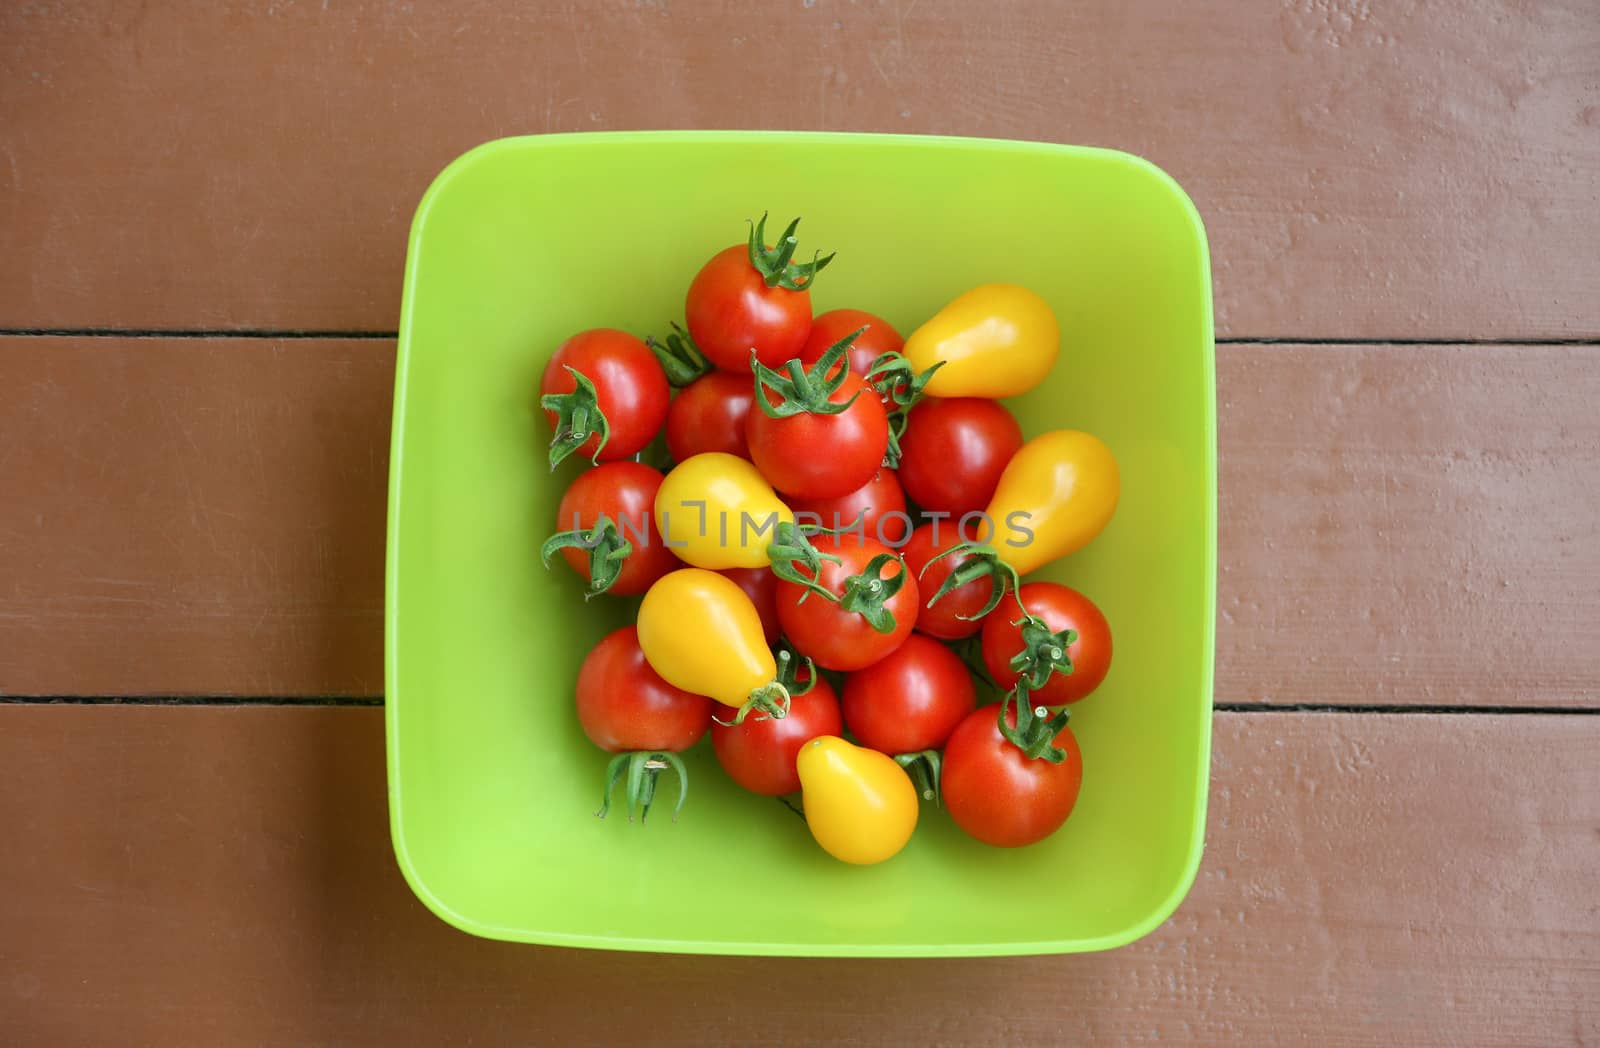 Red and yellow tomatoes by yurii_bizgaimer